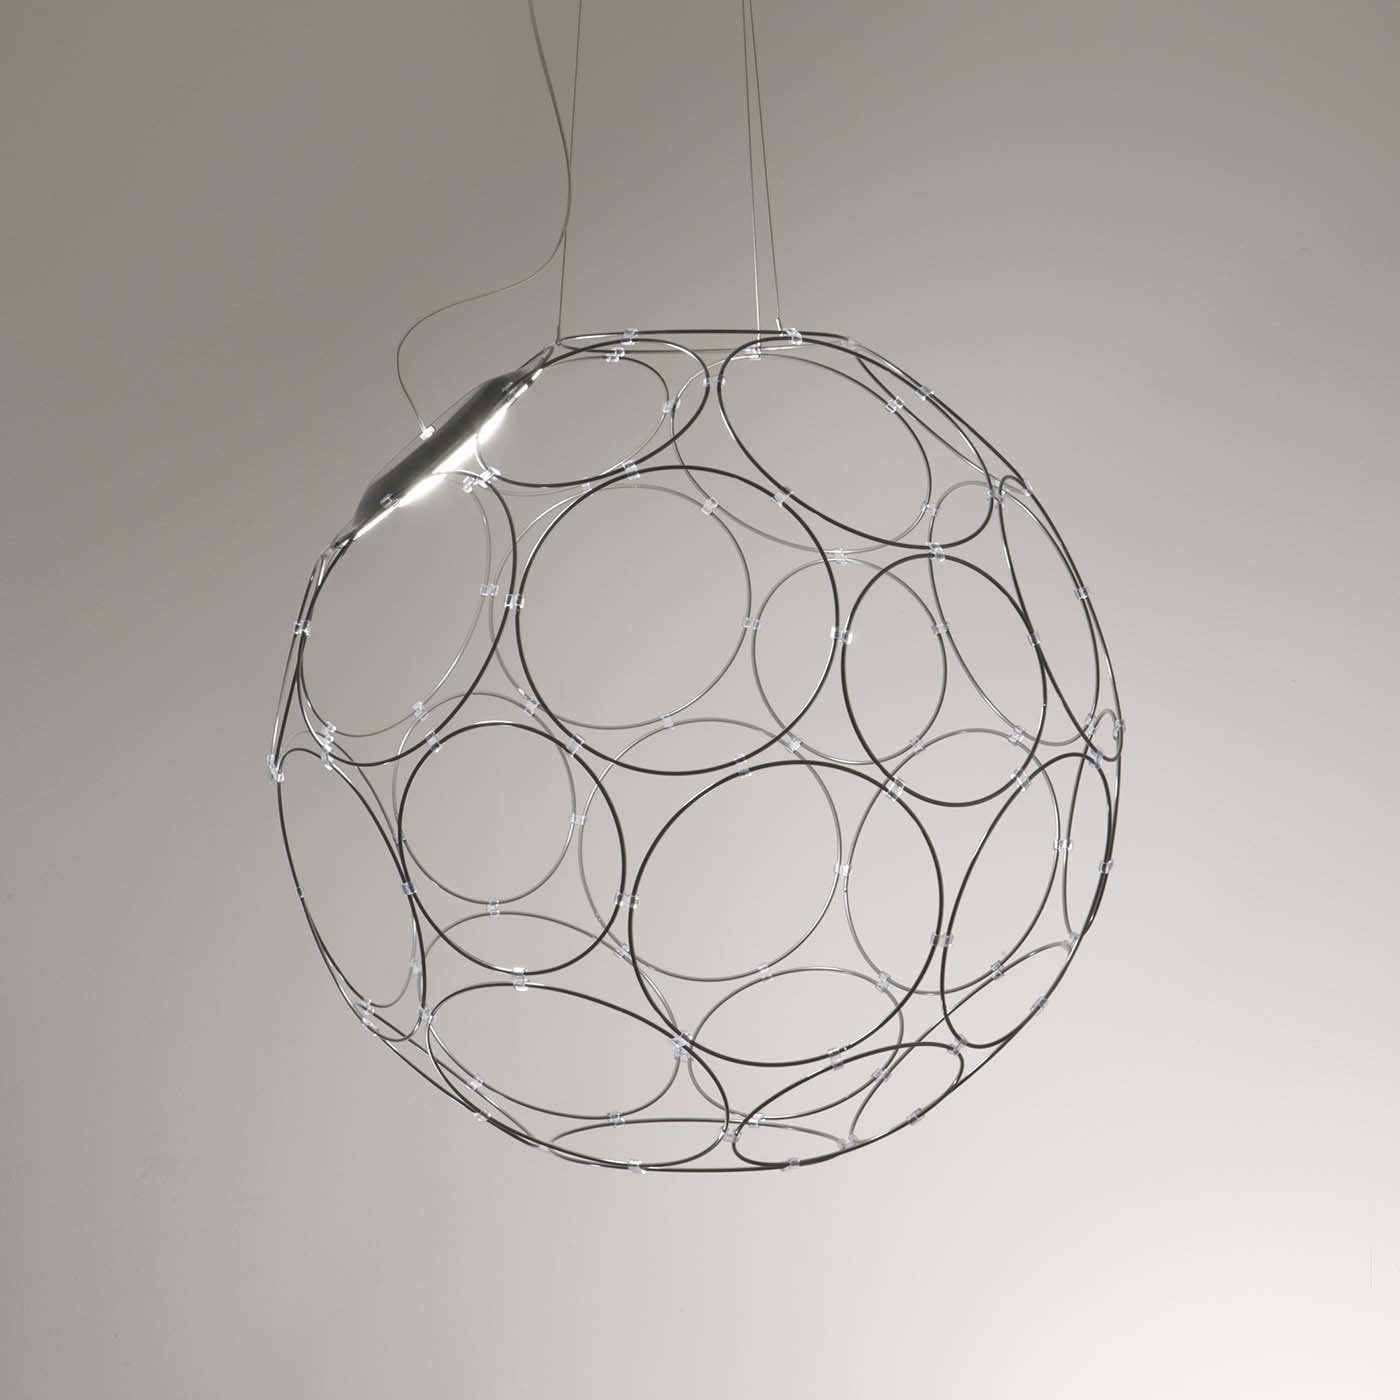 Giro Antracite Pendant Lamp by Formfjord Studio - Alternative view 1